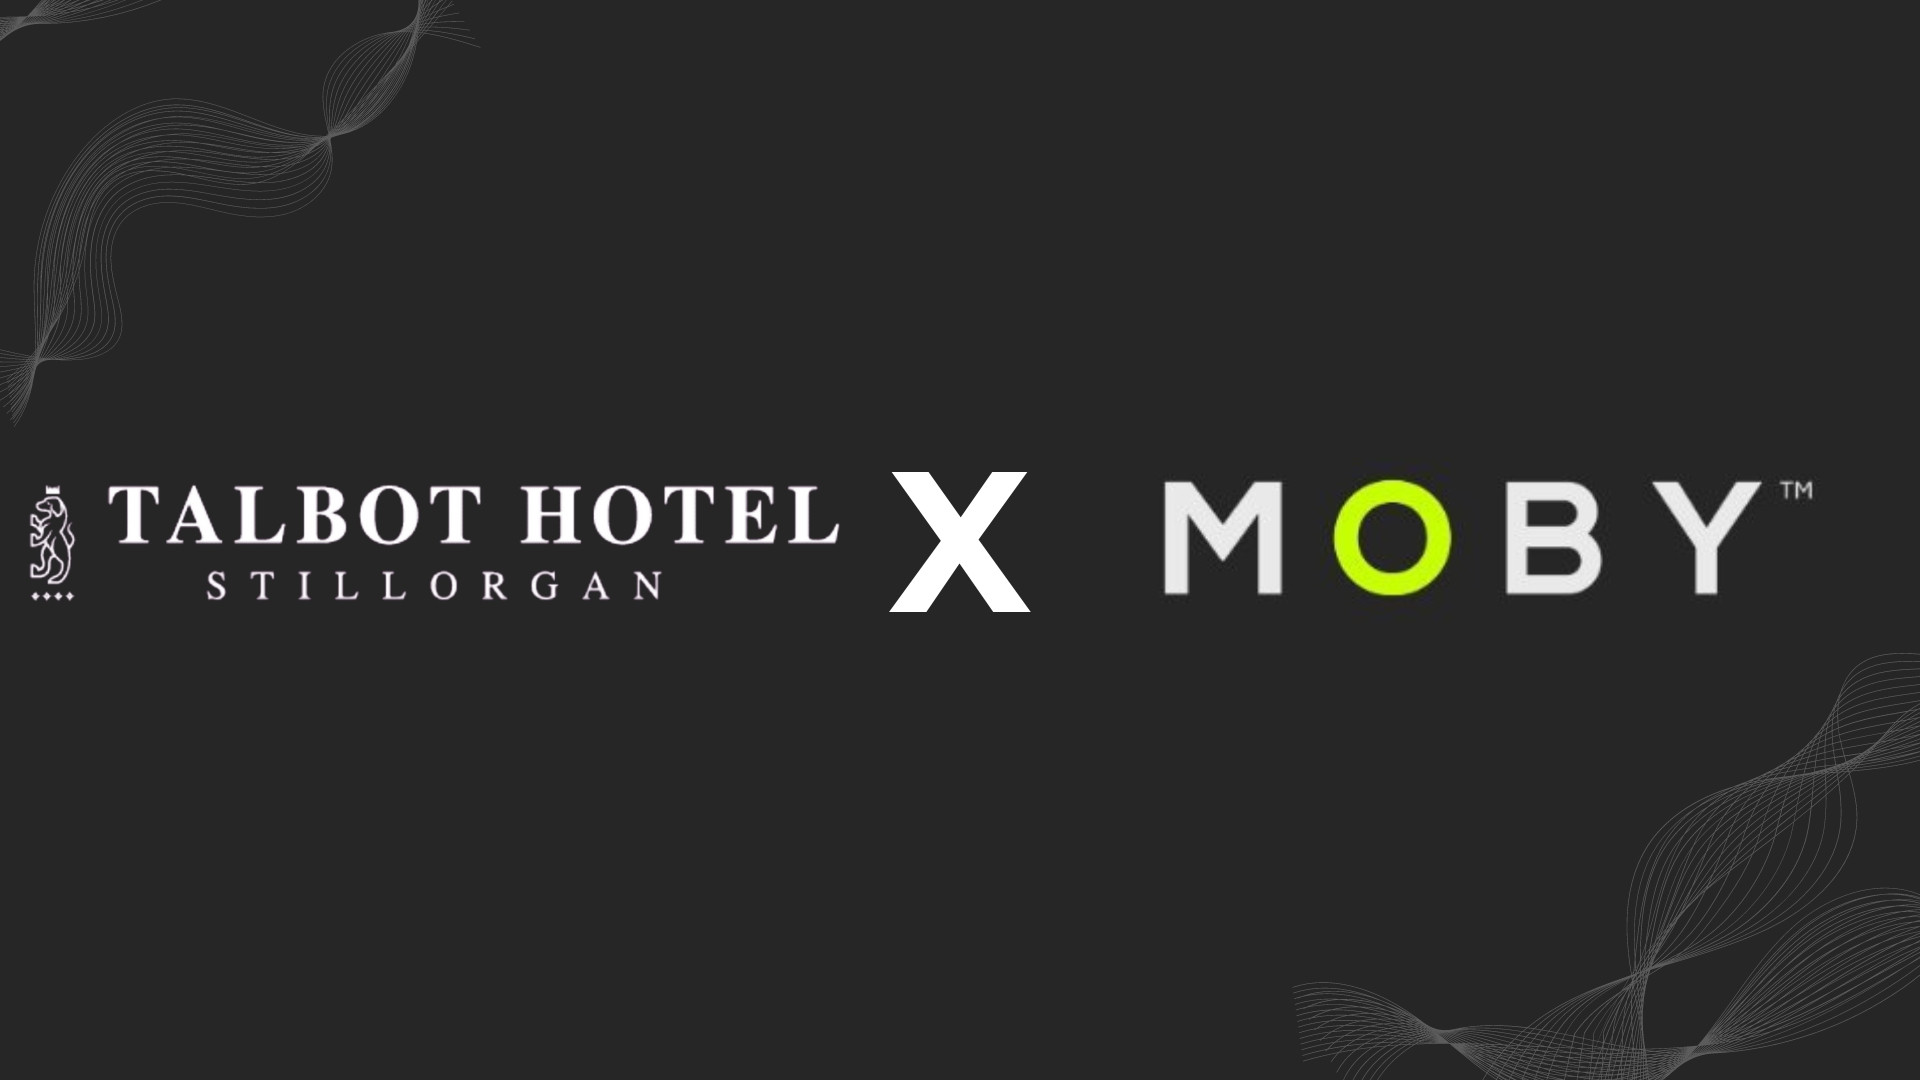 Moby x talbot hotel stillorgan www.talbothotelstillorgan.com